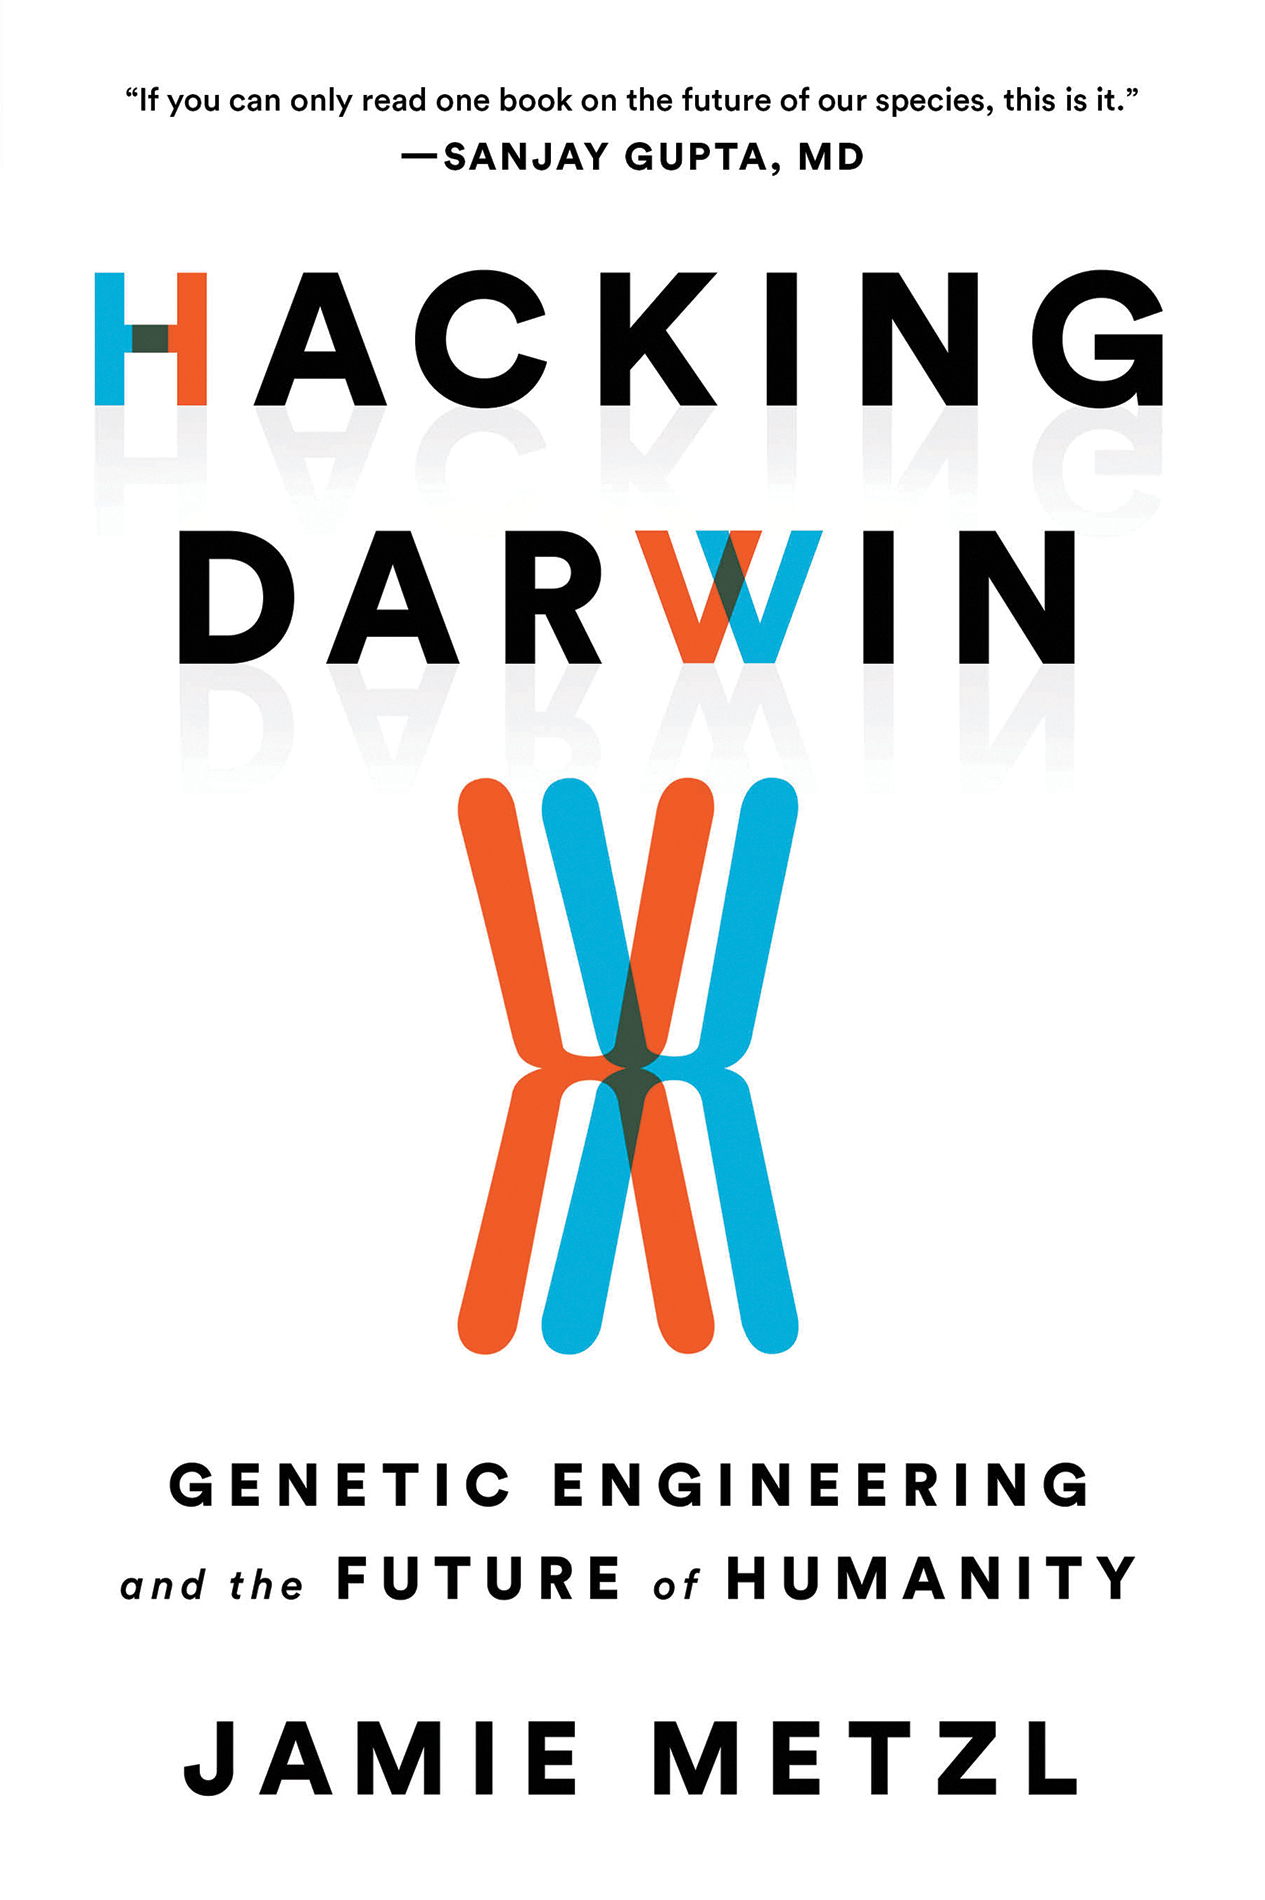 Hacking darwin white book cover art